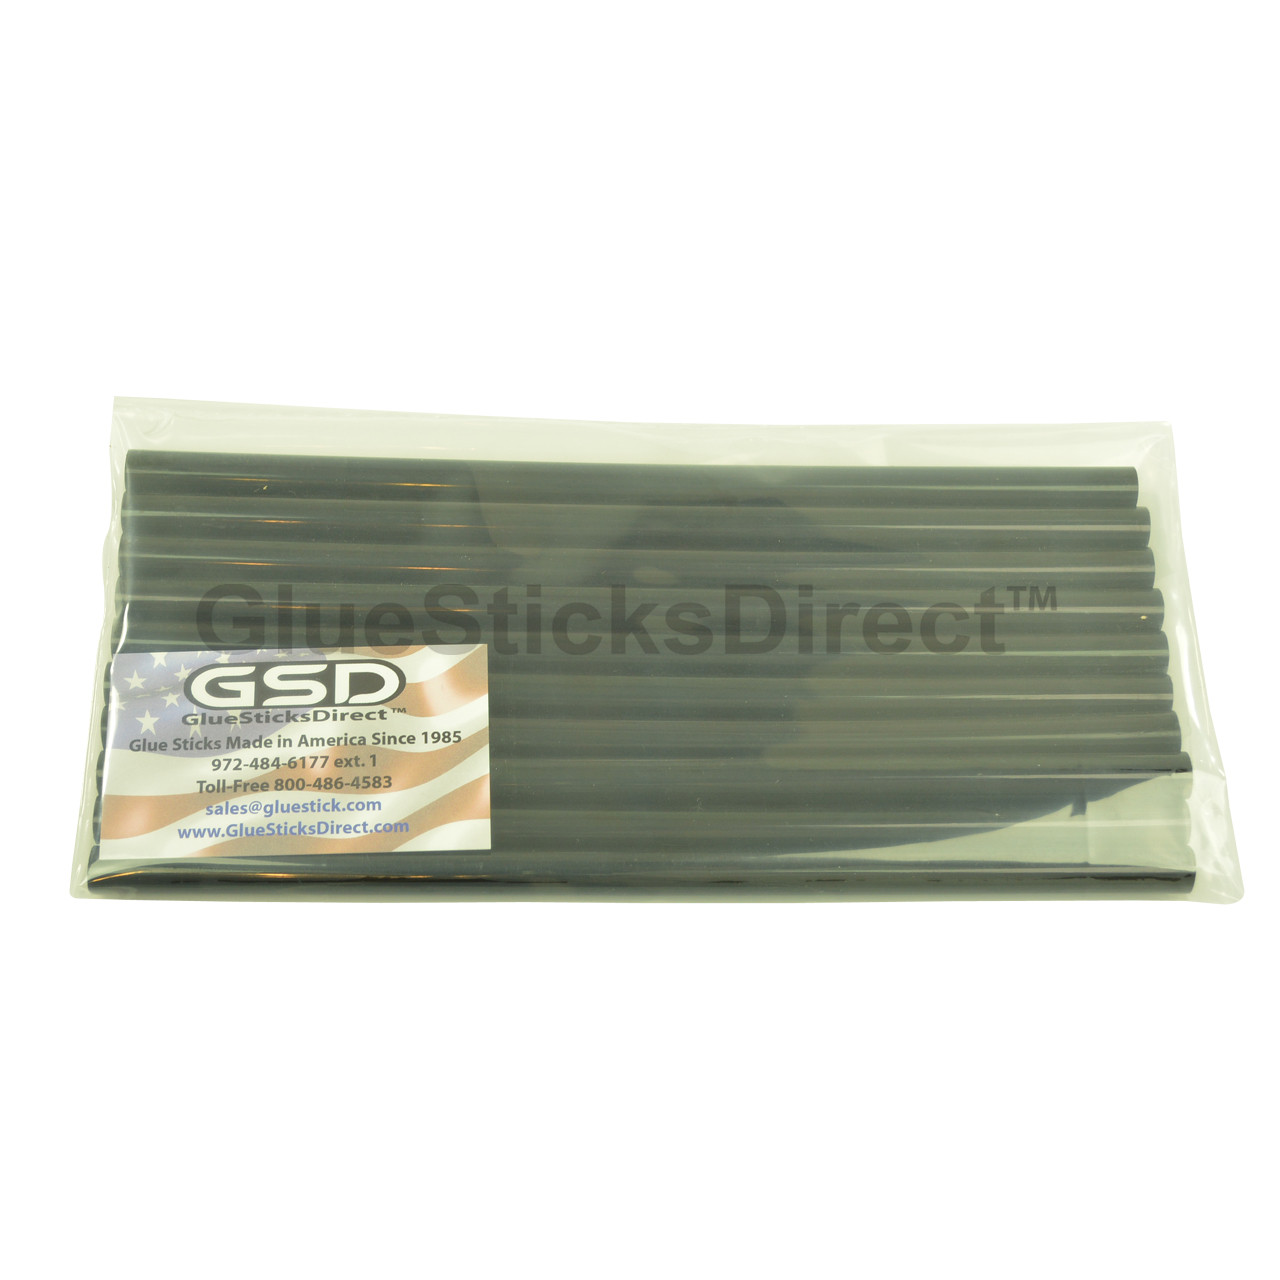 GlueSticksDirect PDR Glue Sticks Black 7/16 X 10 25 lbs Bulk PDR